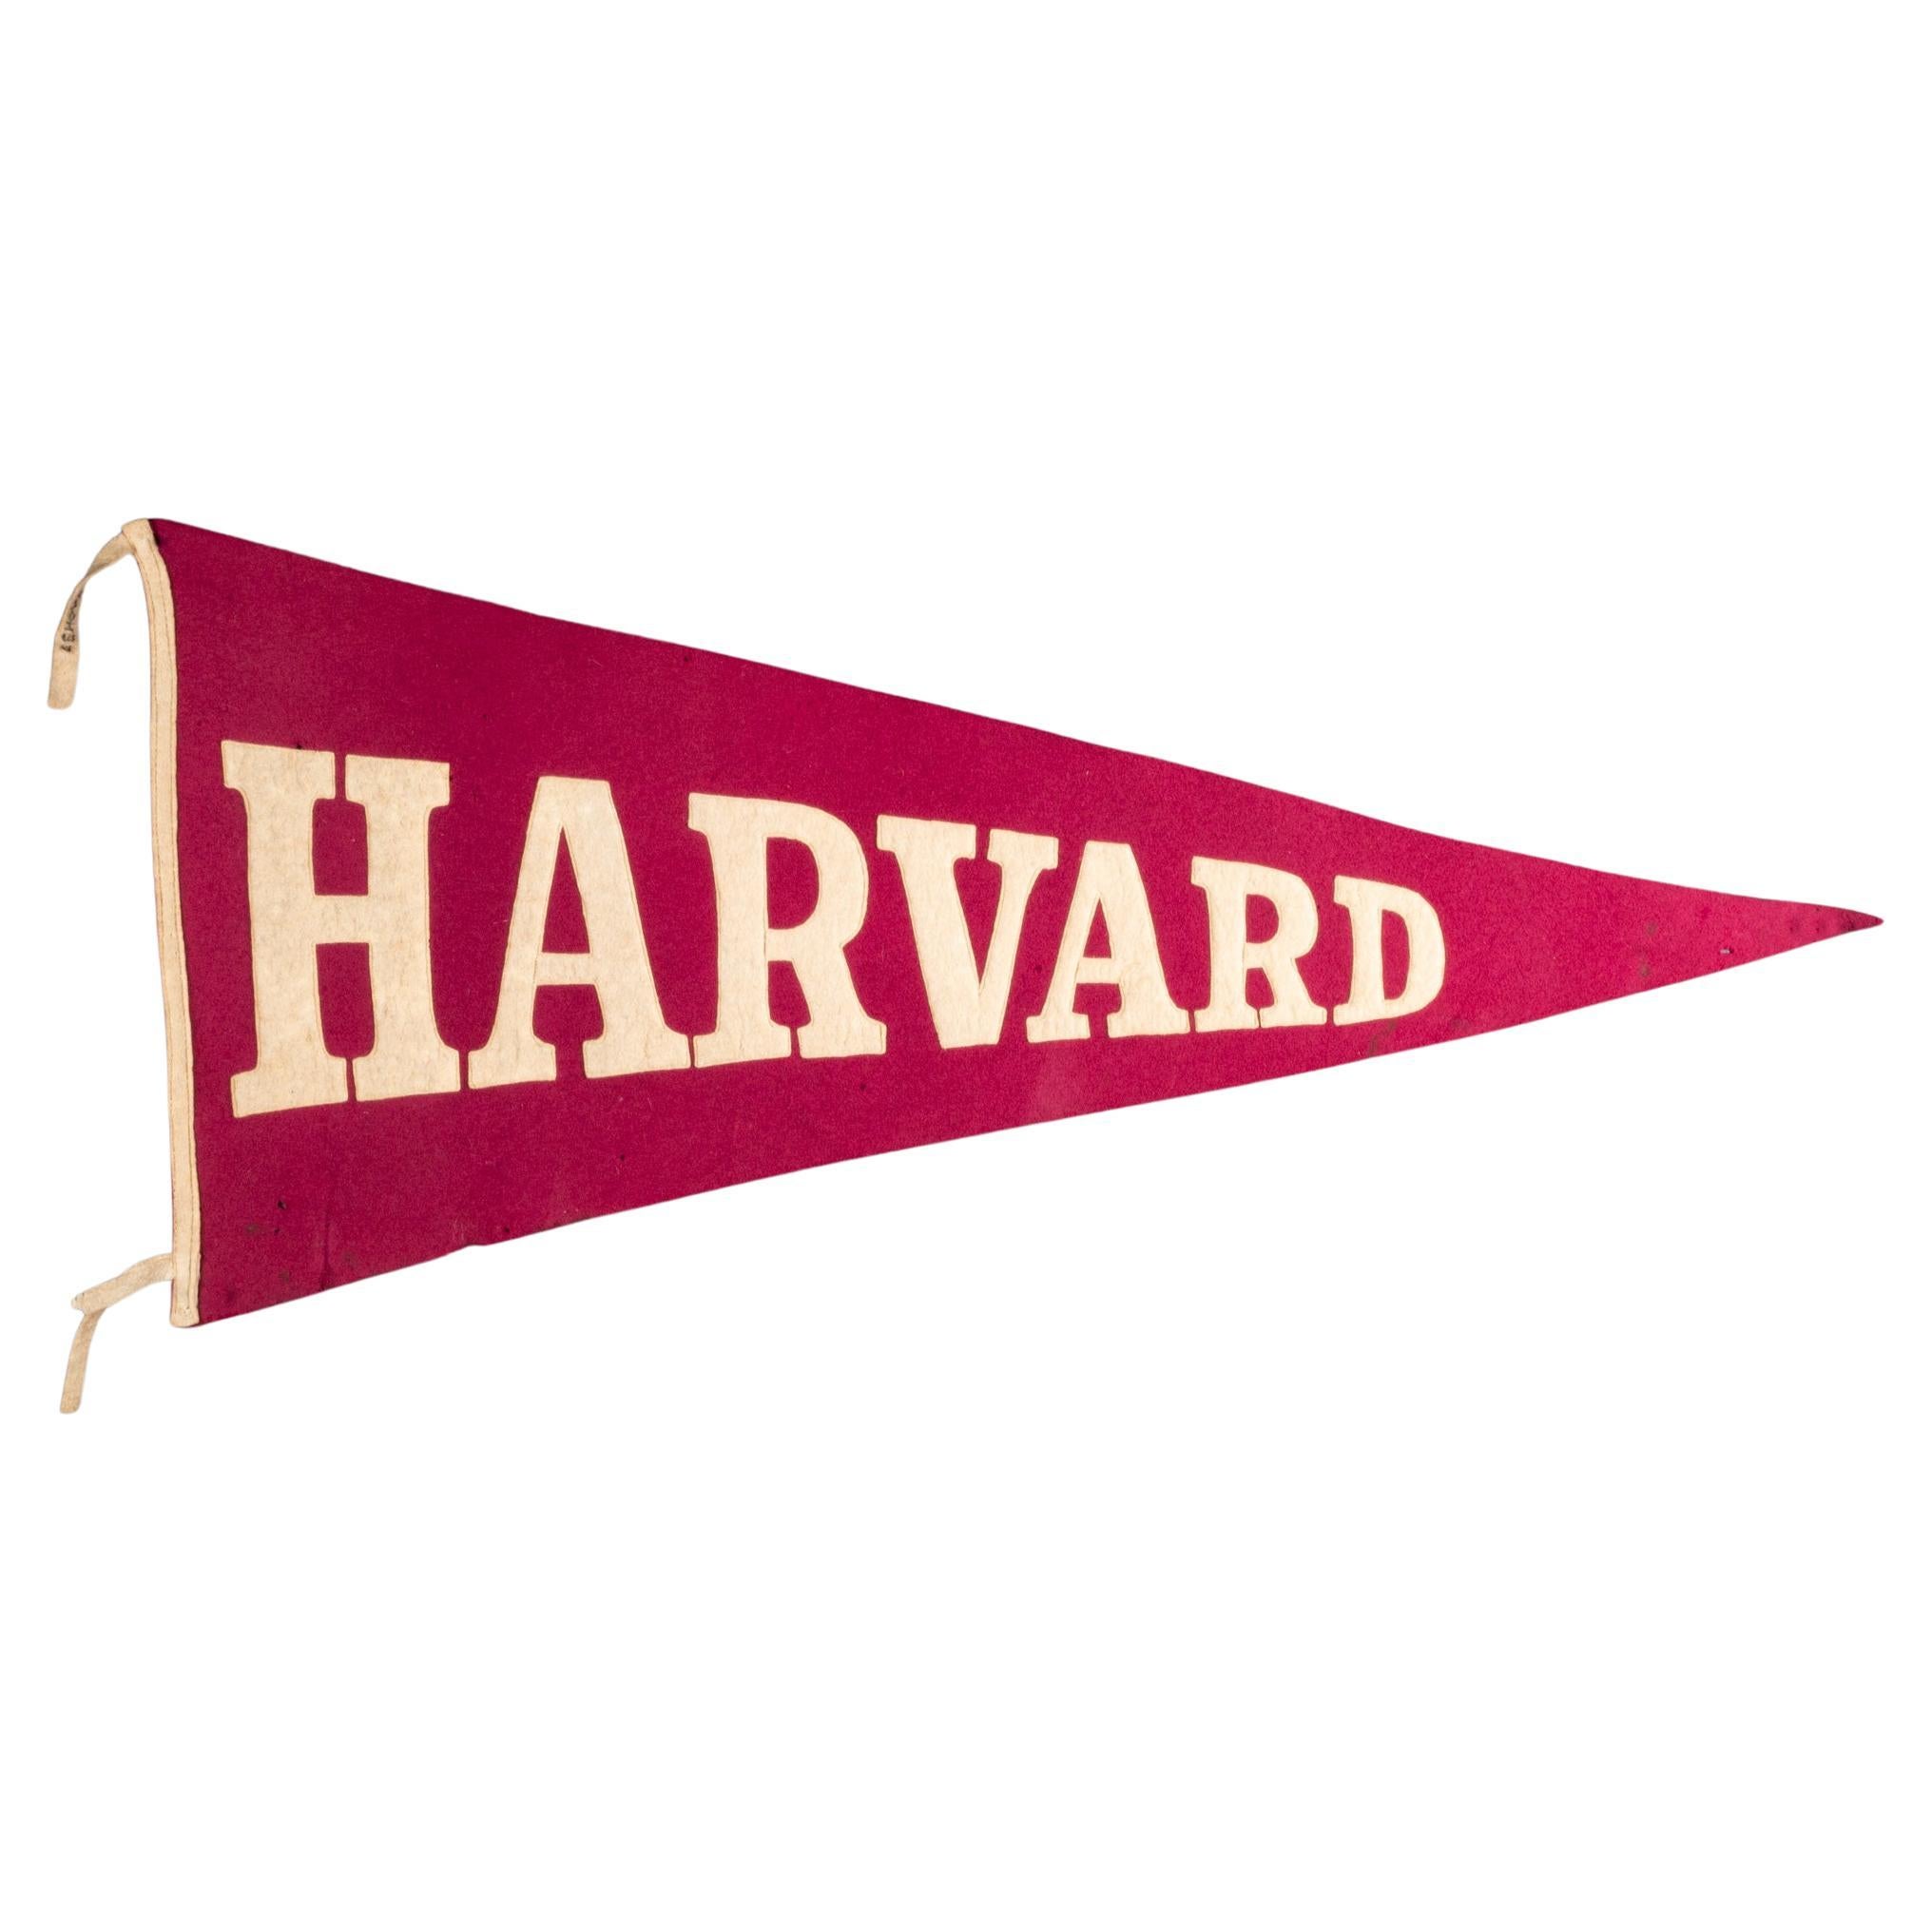 Harvard University Pennant Banner, circa 1920-1940 For Sale